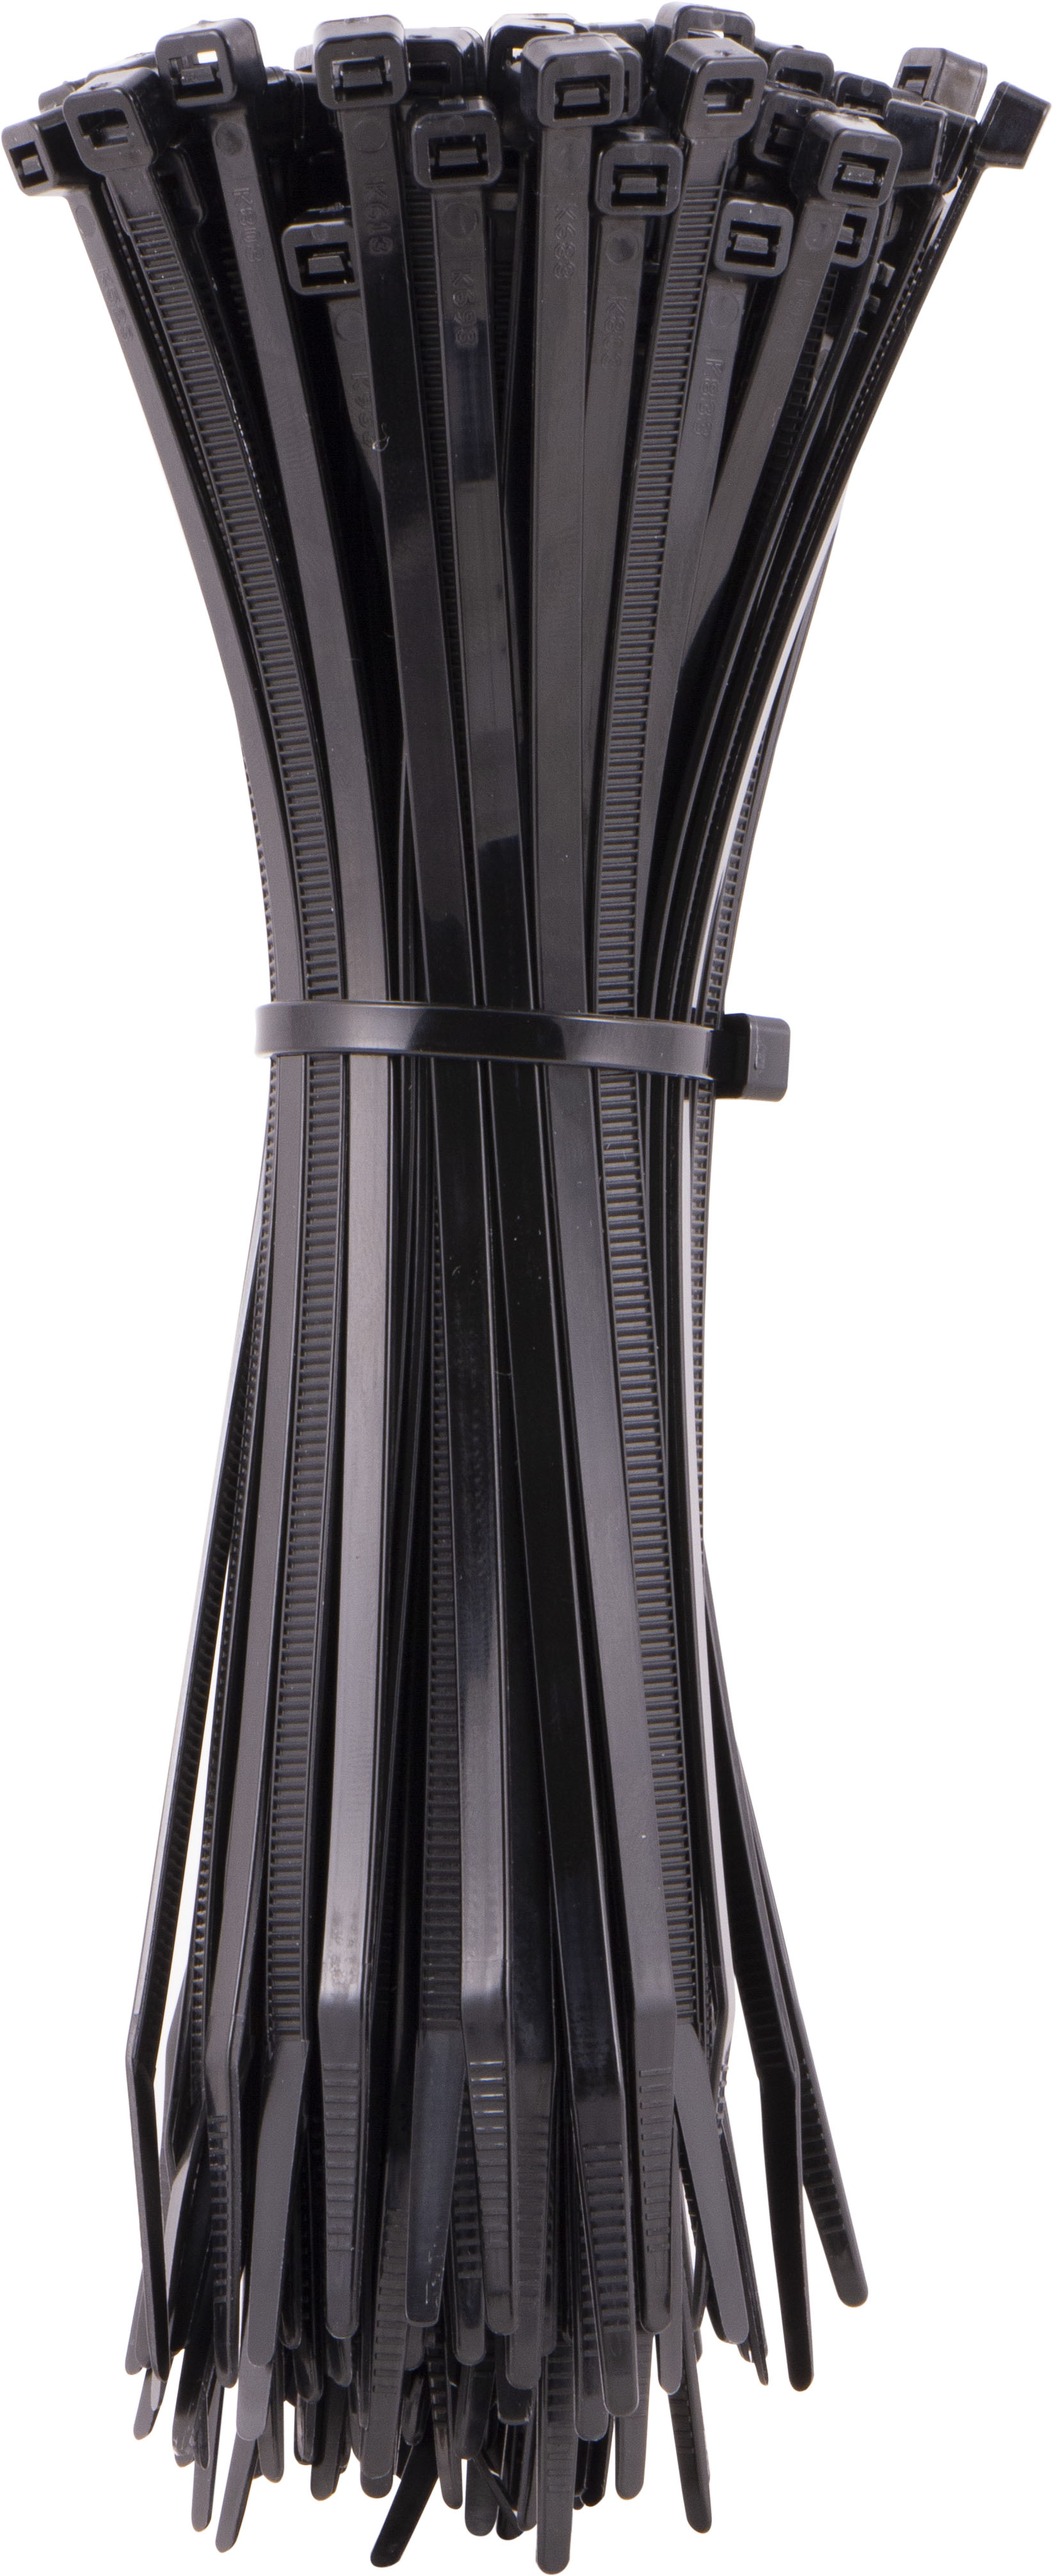 Hyper Tough 11in. Black Zip Ties 100 Pack, 75lb Tensile Strength, Nylon Mount Cable Ties, Resealable Bag, 25469 - image 1 of 7